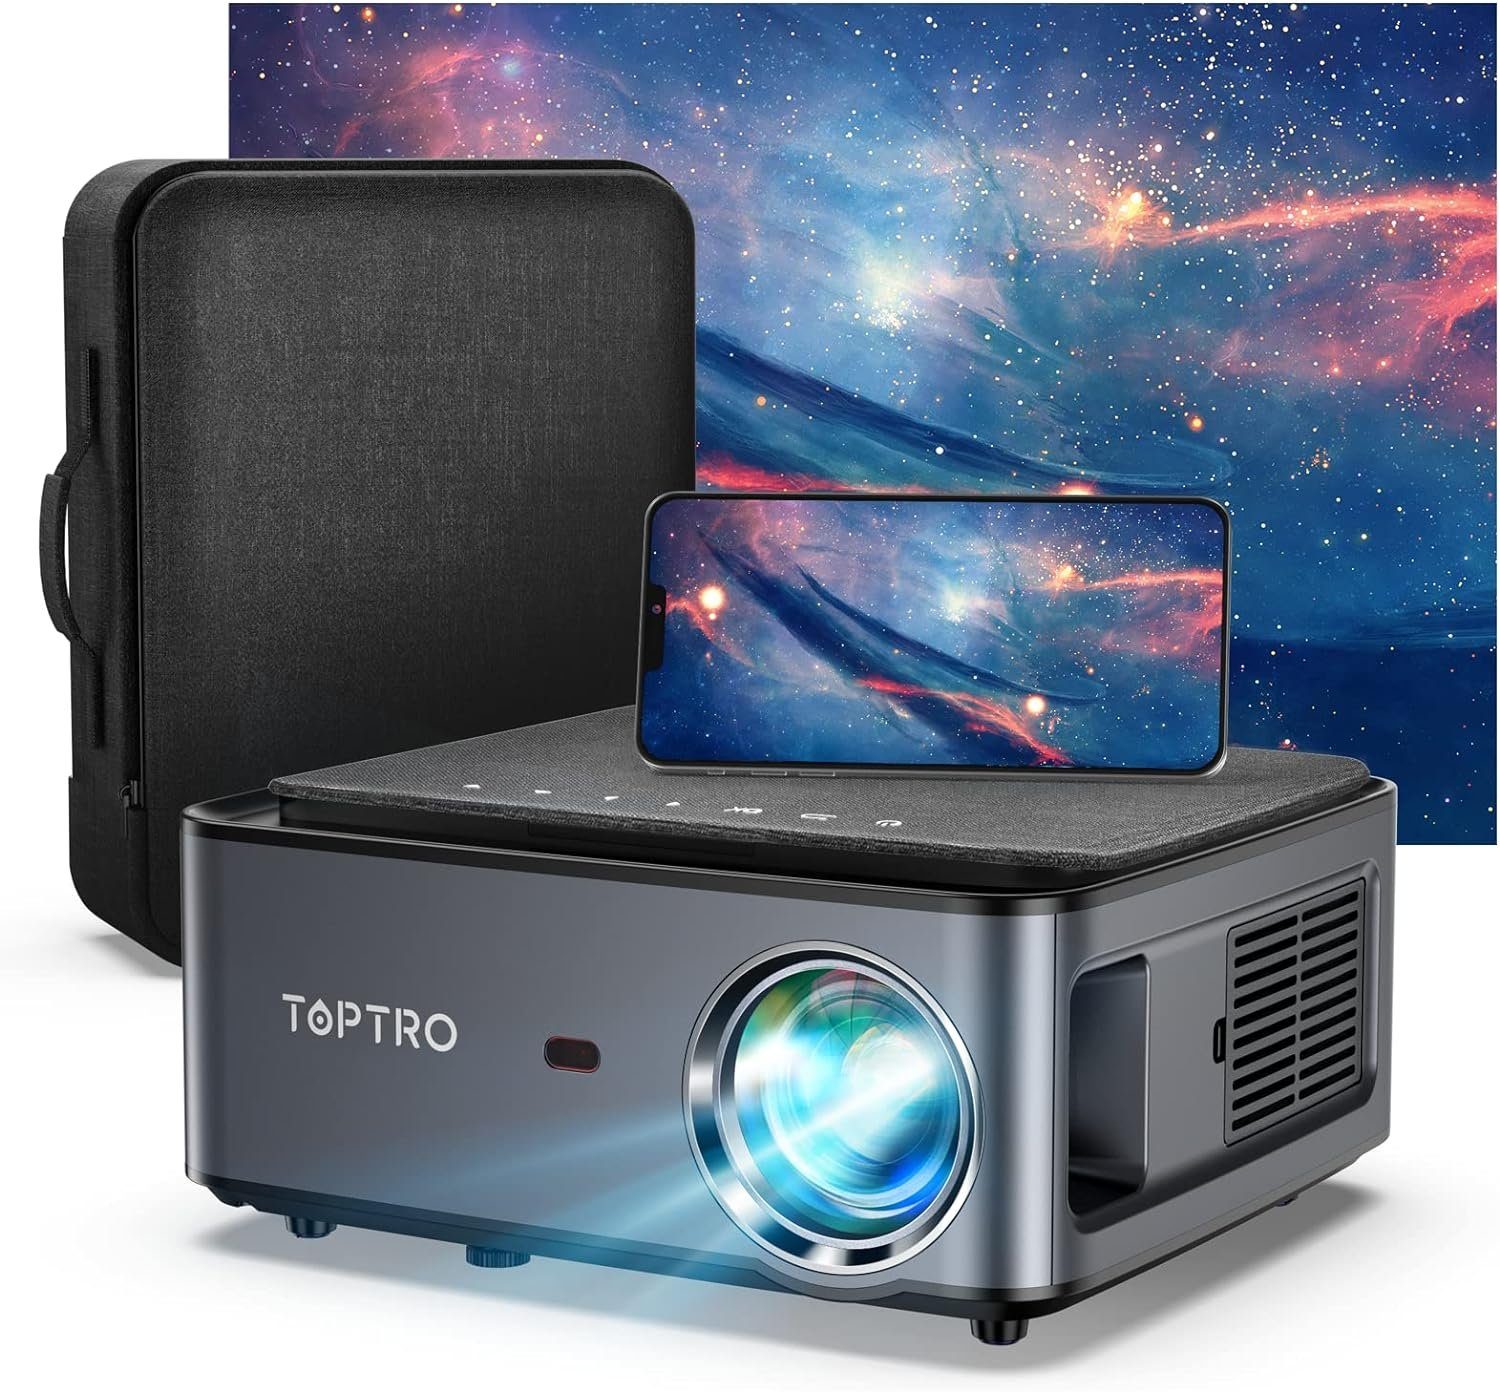 TOPTRO Portabler Projektor (1920x1080 px, Toptro beamer lumen heimkino projector kompatibel mit ios android)